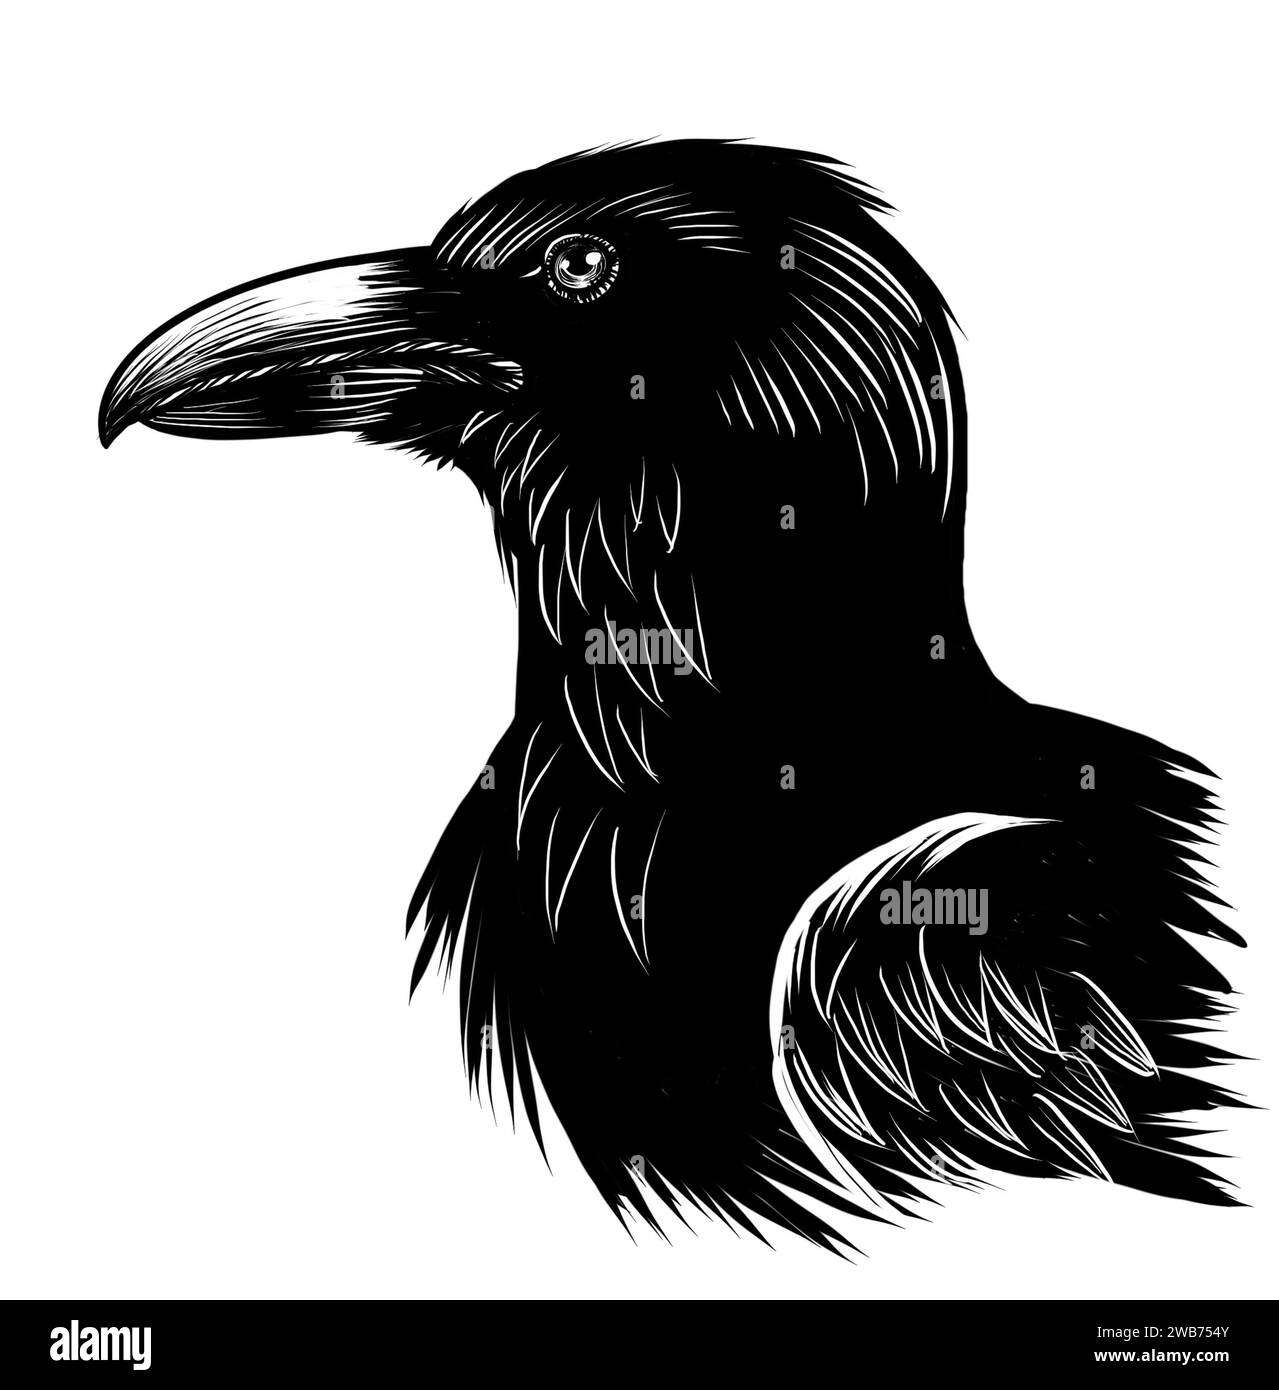 Raven bird head. Retro styled hand-drawn black and white illustration Stock Photo